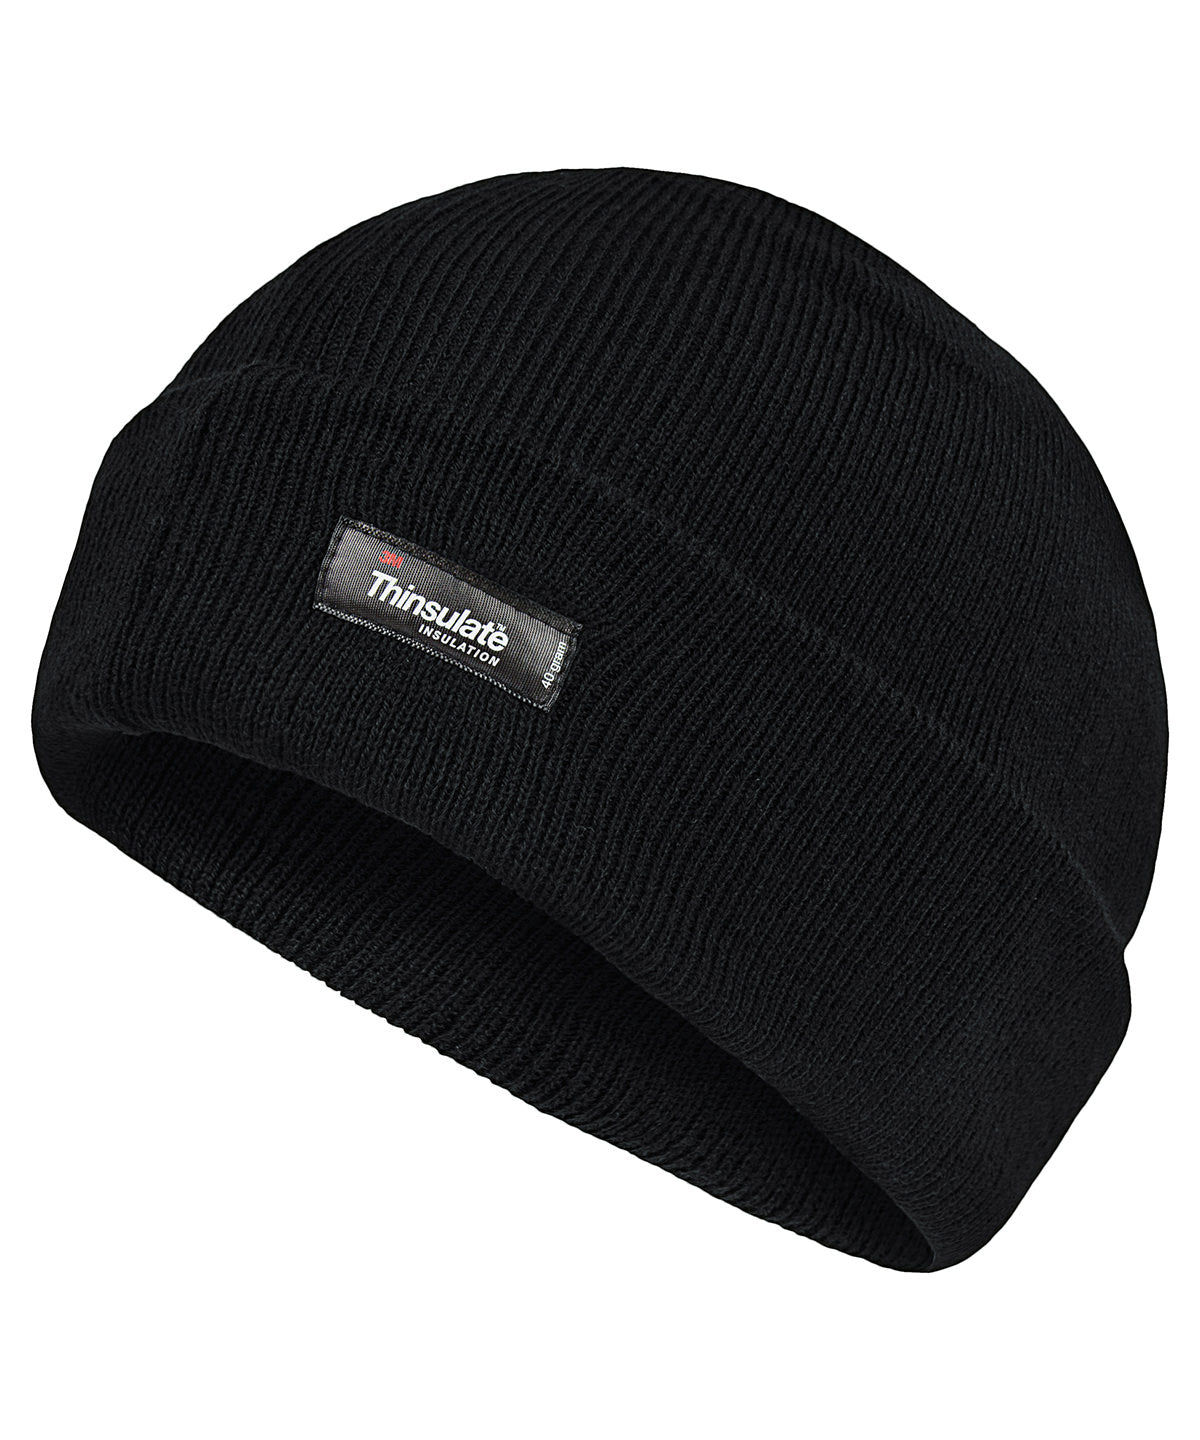 Thinsulate hat (RG294) - COOZO